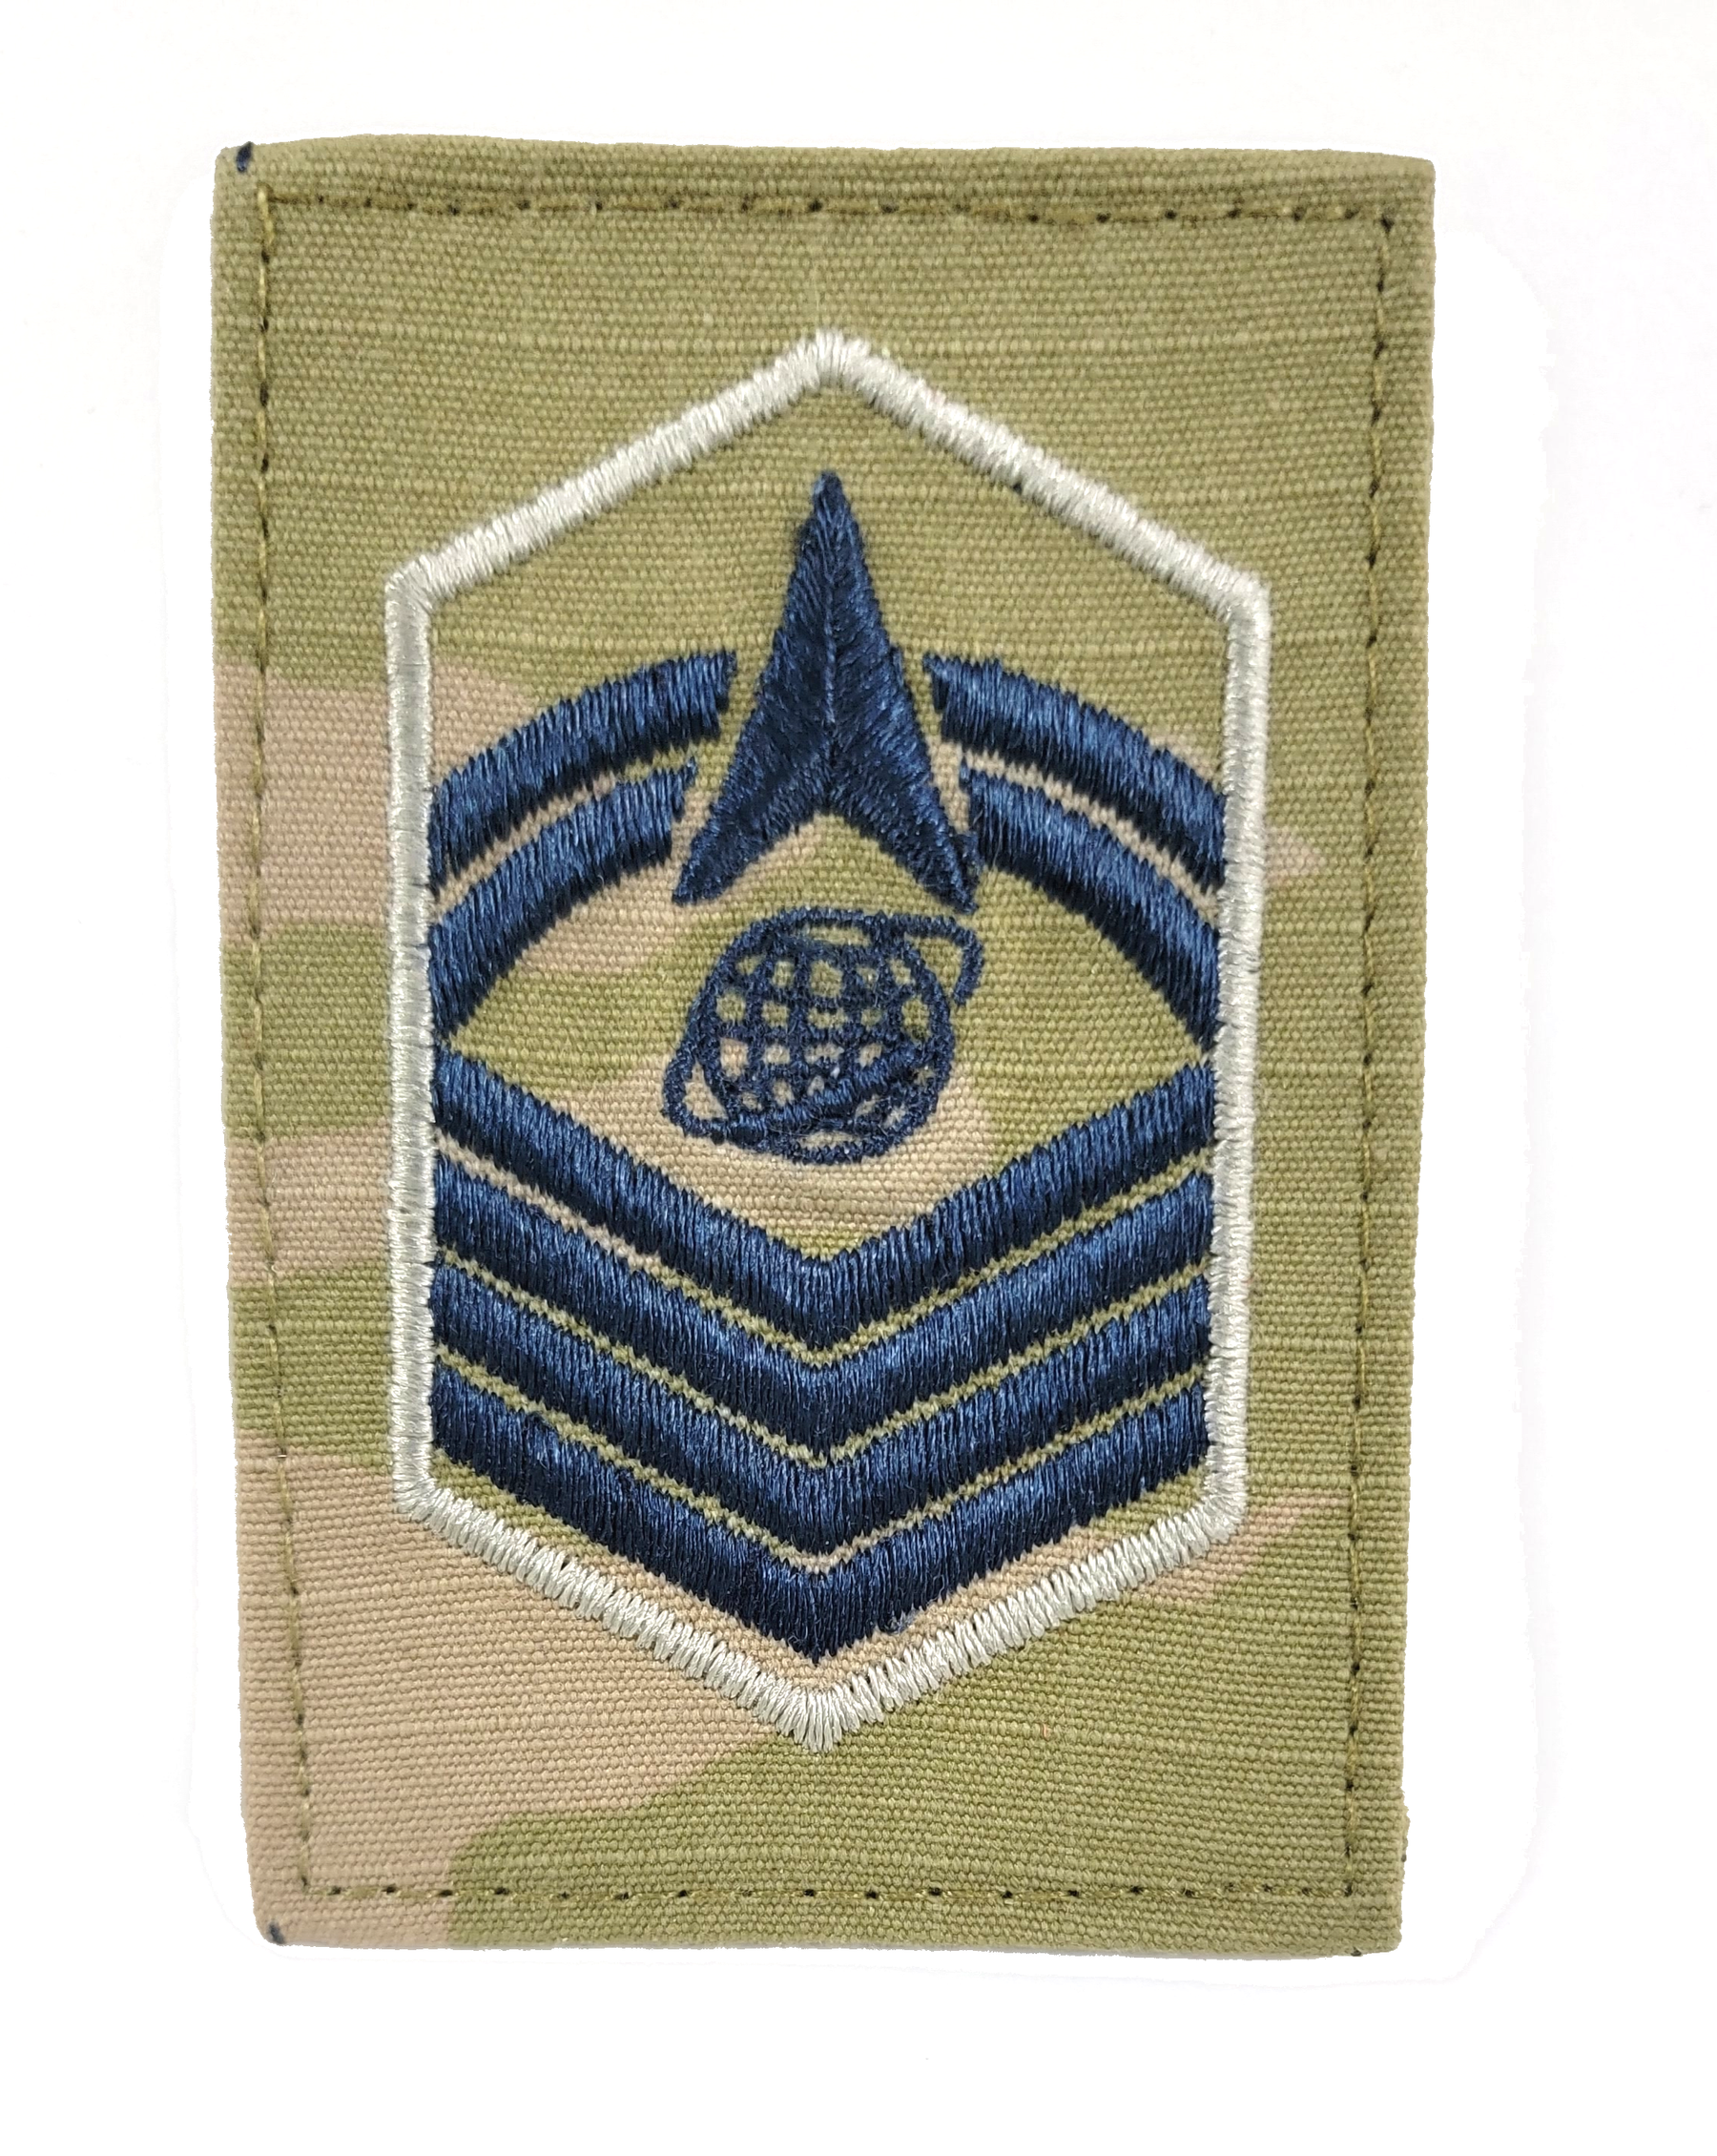 U.S. Space Force OCP Rank Senior Master Sergeant